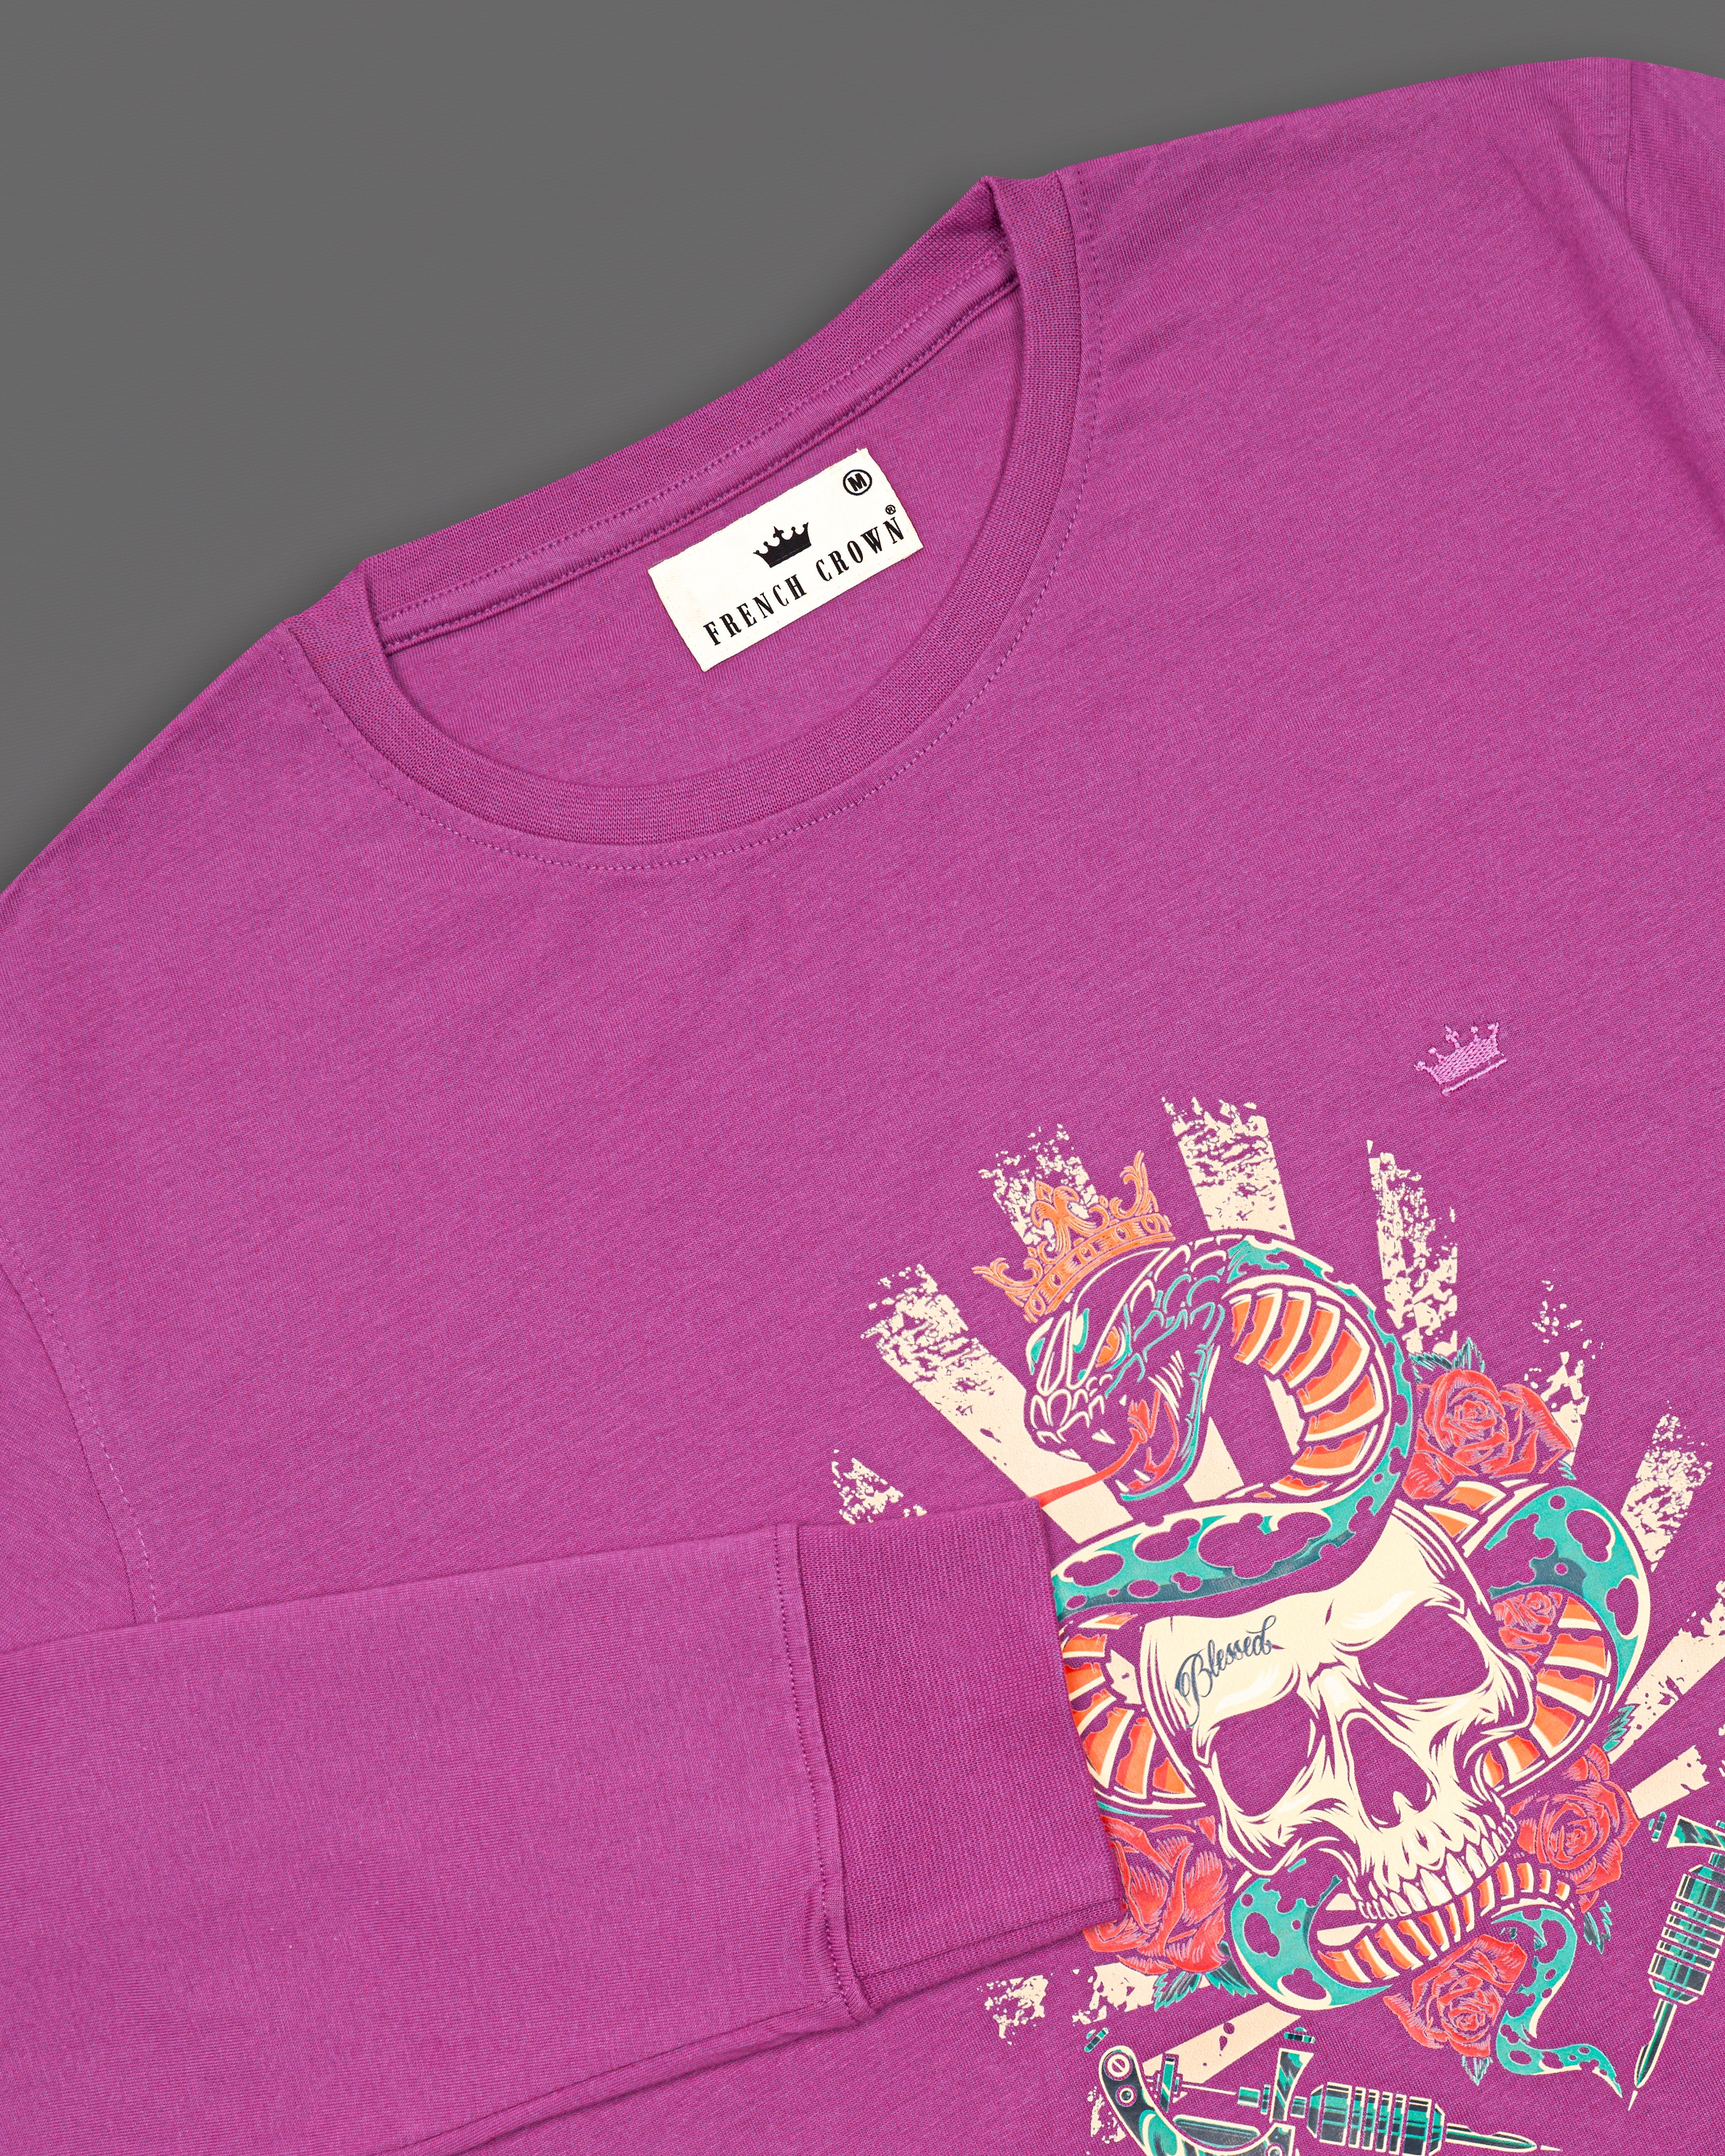 Bashful Pink Rubber Printed Super Soft Organic Cotton Sweatshirt TS166-W01-S, TS166-W01-M, TS166-W01-L, TS166-W01-XL, TS166-W01-XXL